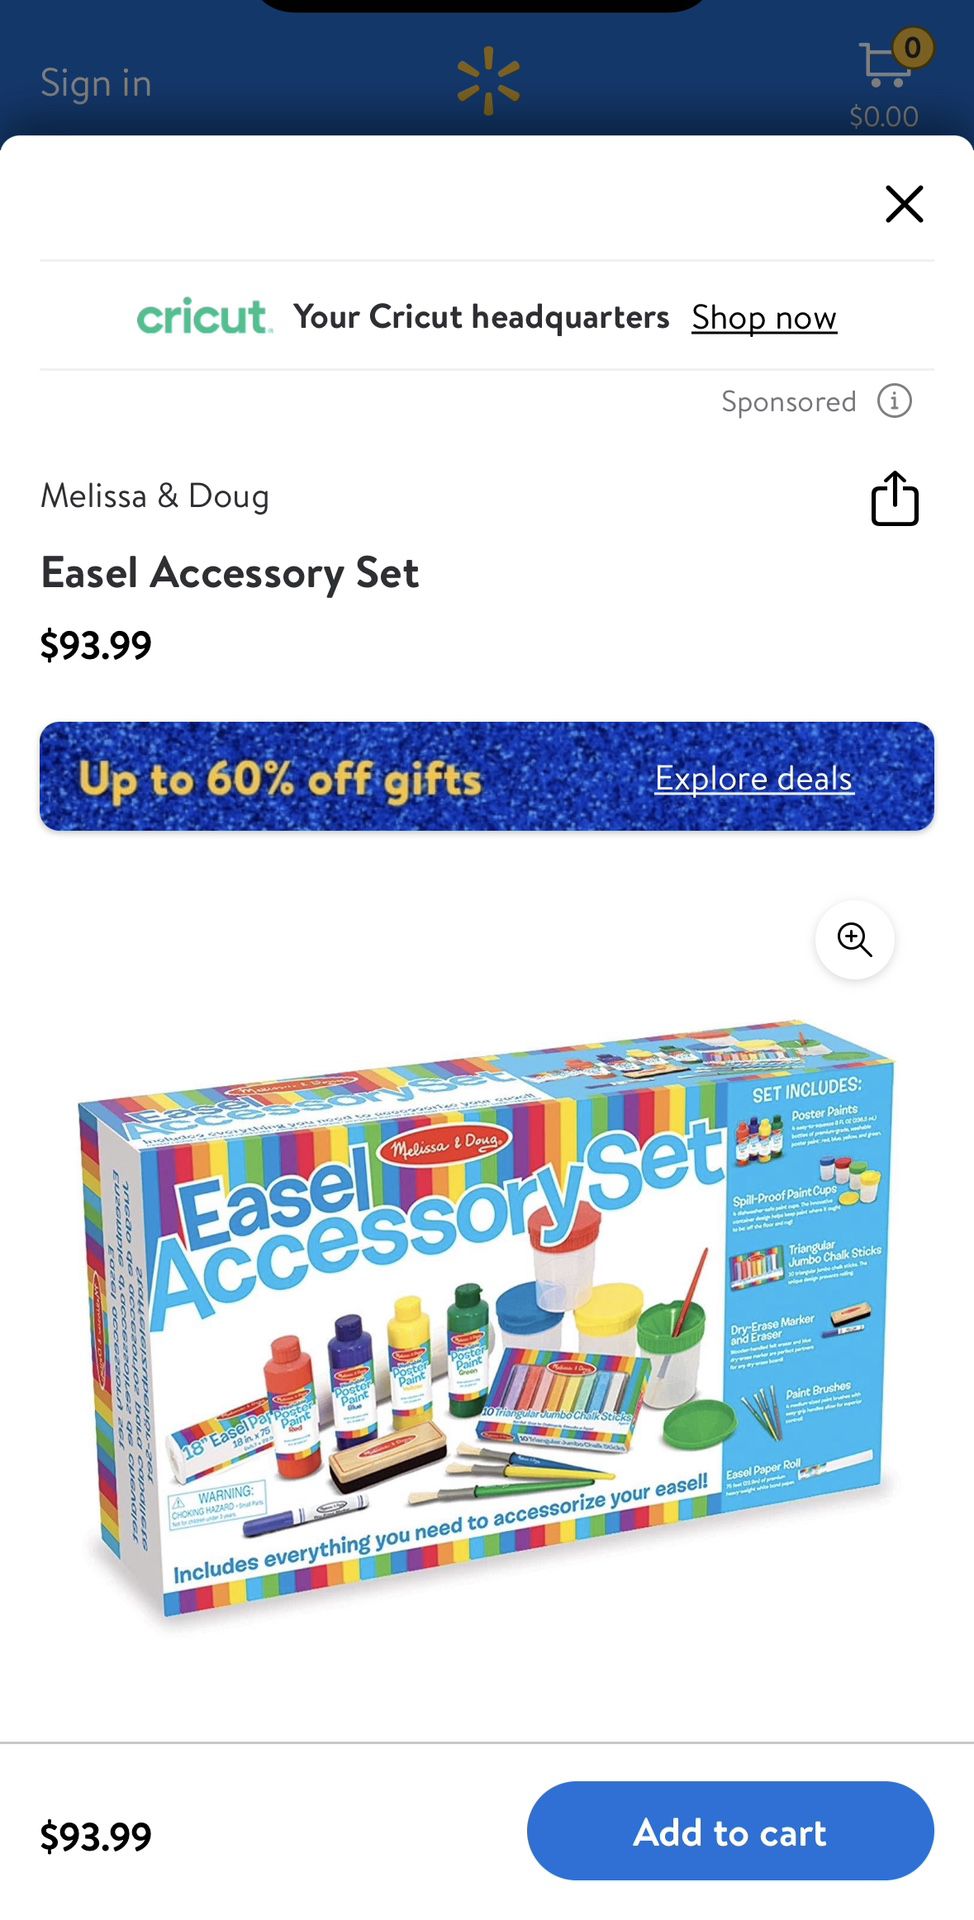 Easel Accessory Paint Set 